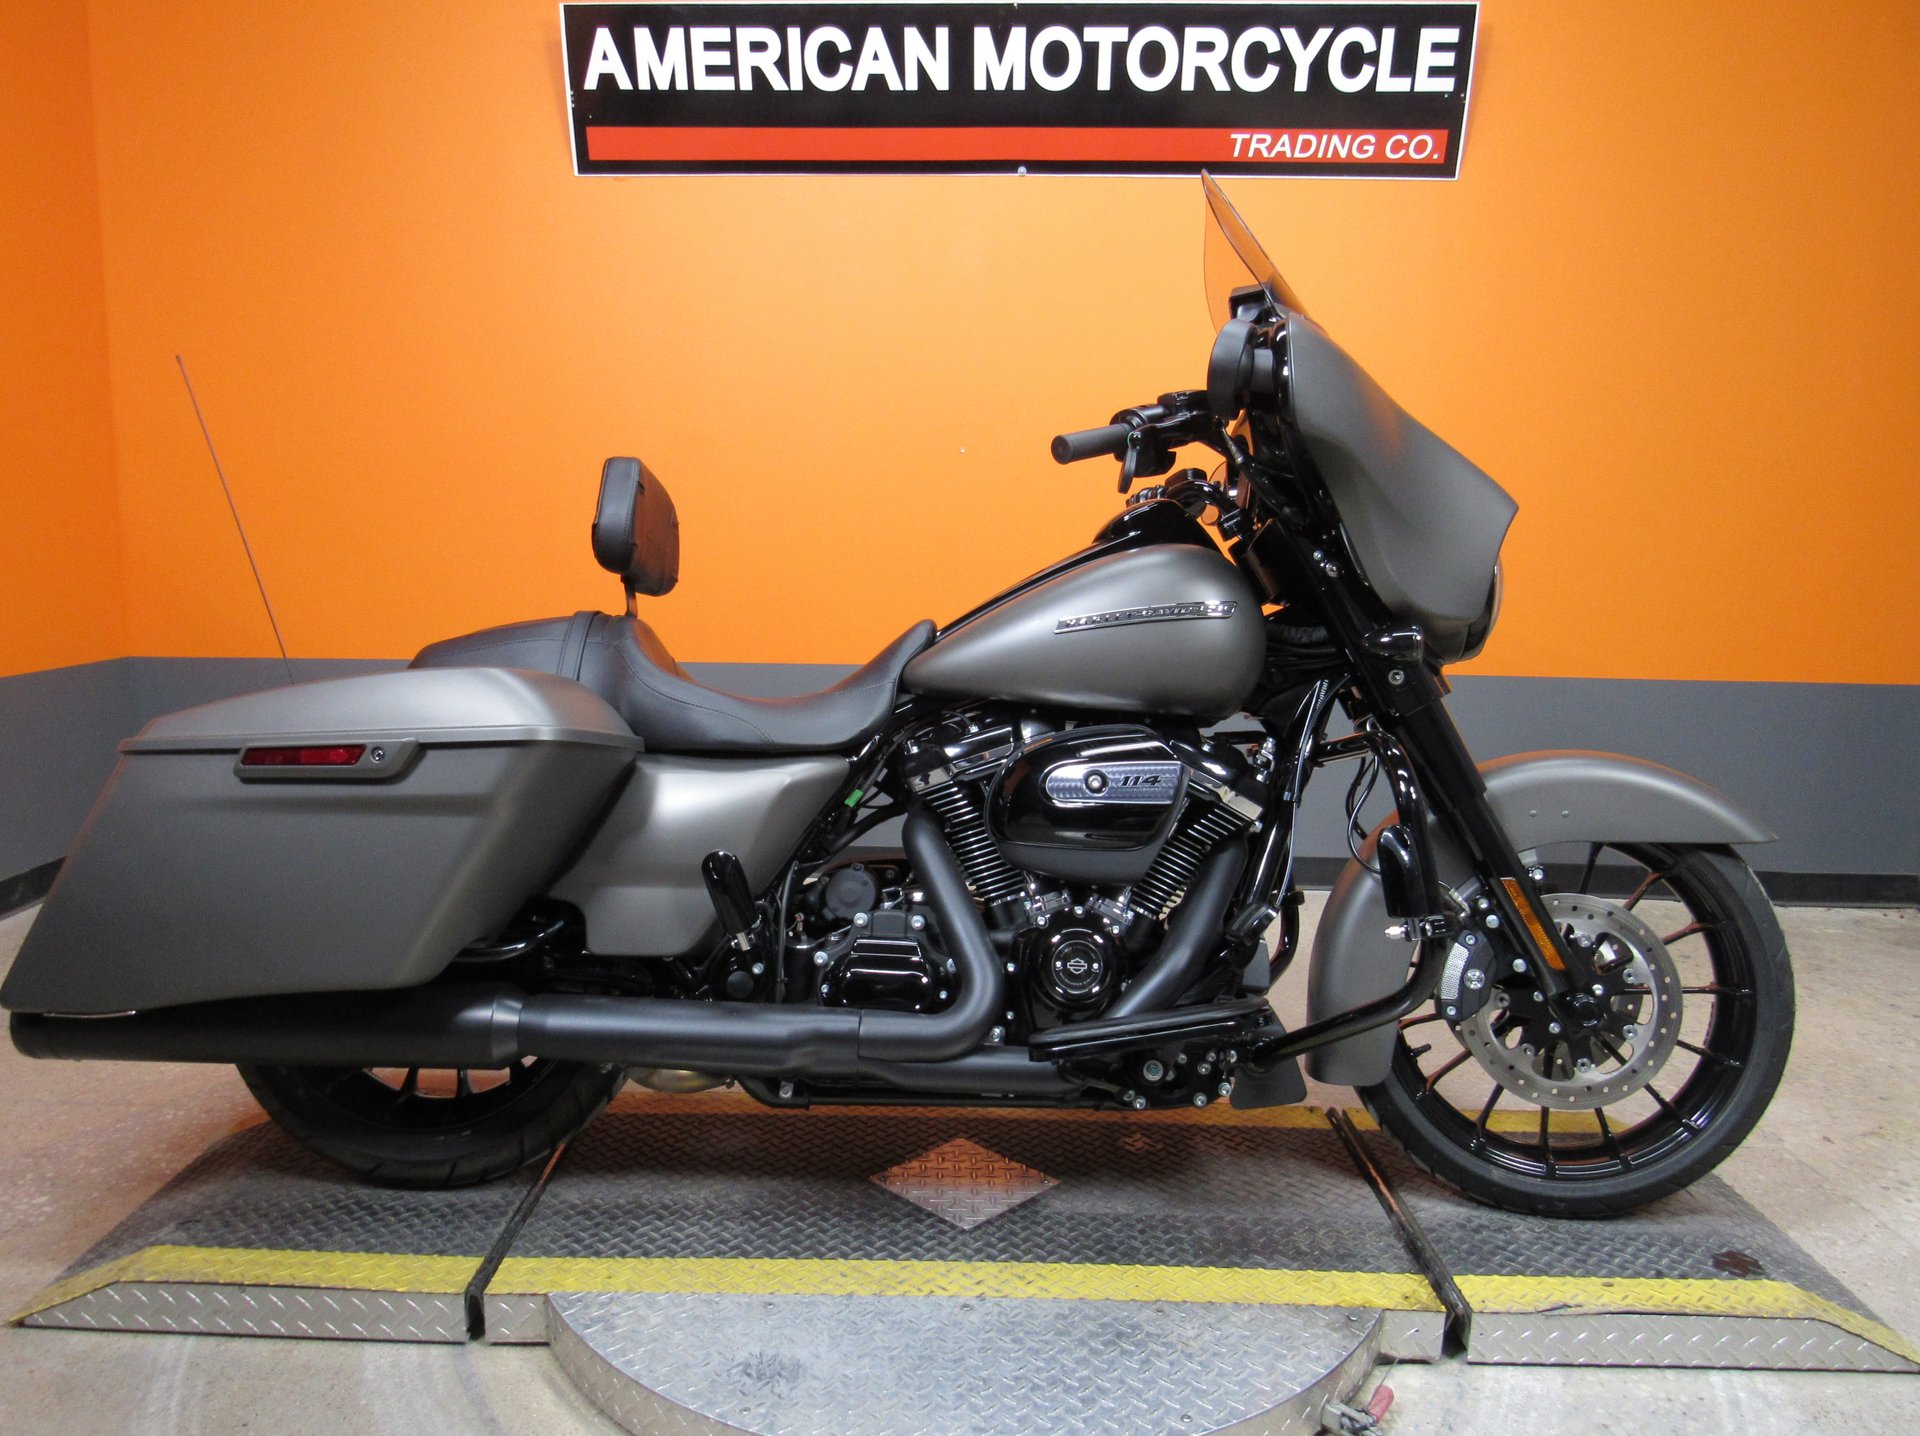 2019 Harley Davidson Street Glide American Motorcycle Trading Company Used Harley Davidson Motorcycles